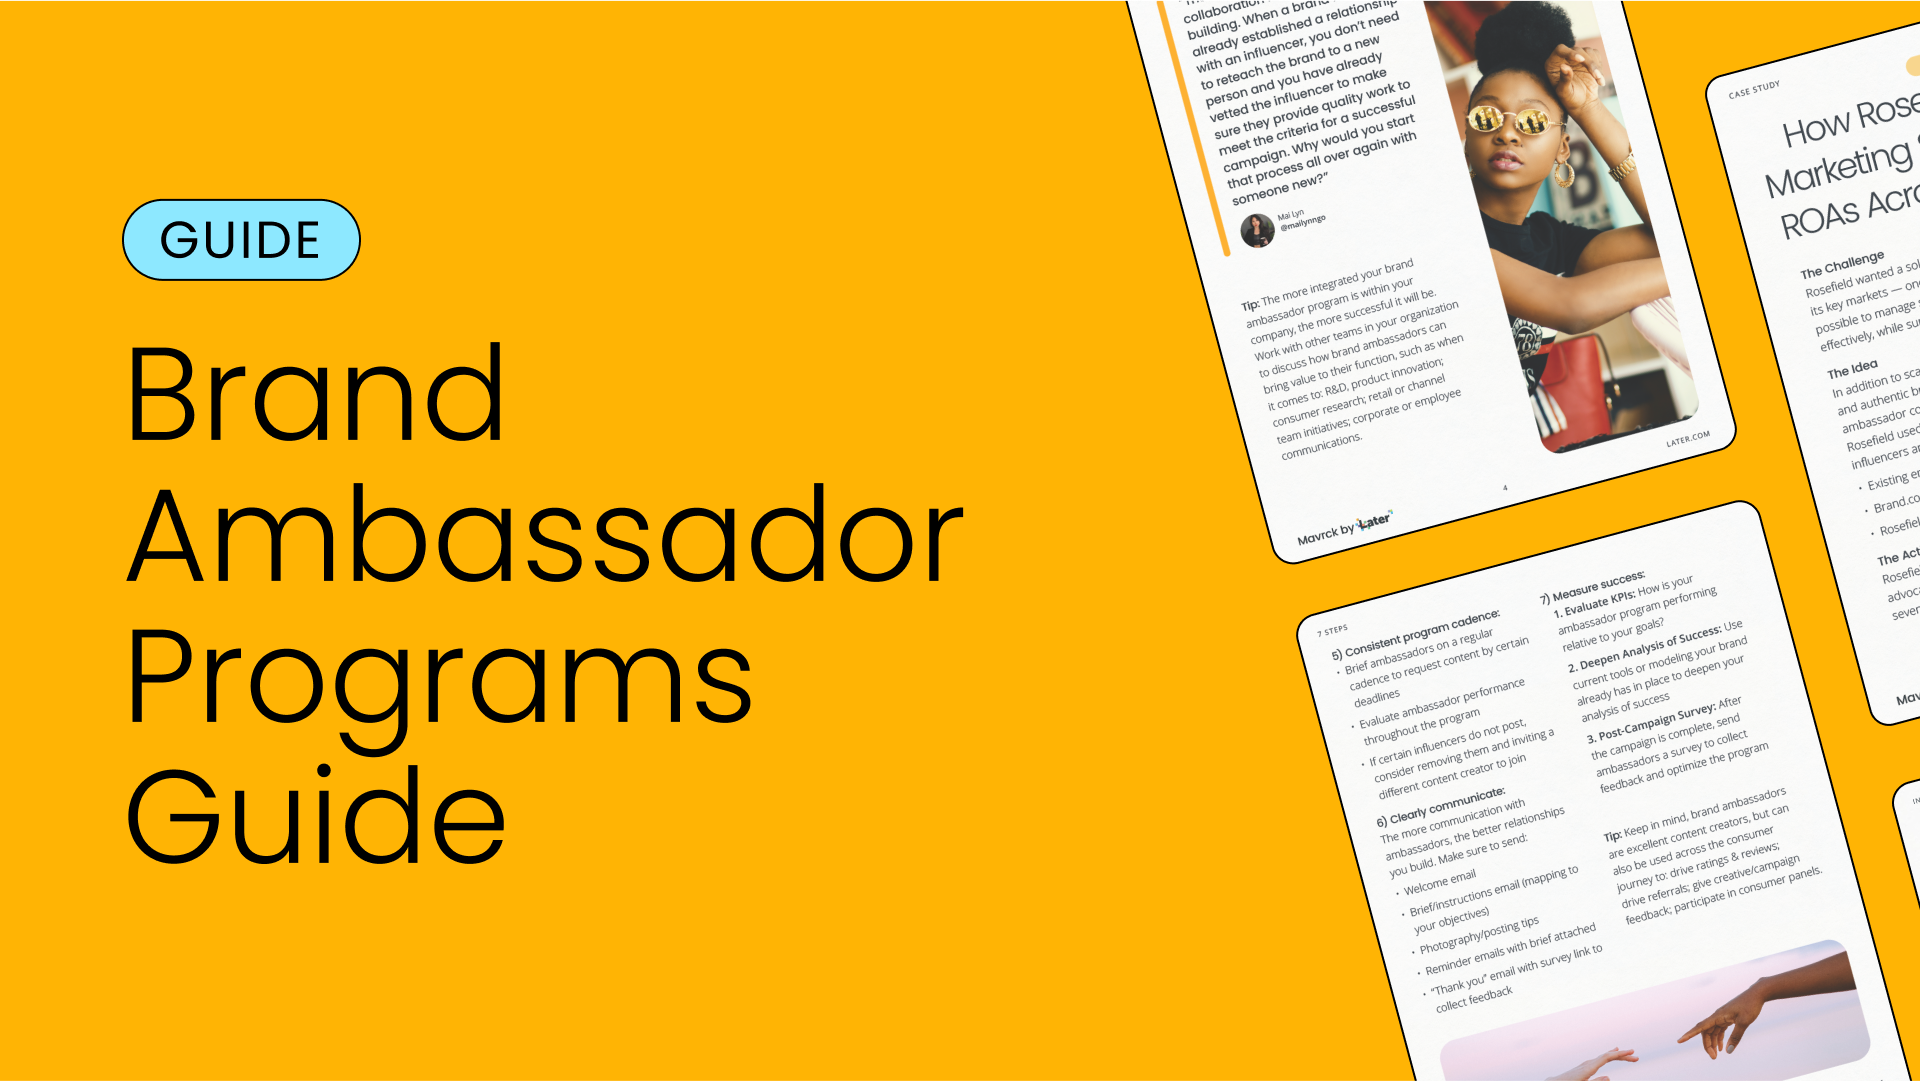 Guide to Brand Ambassador Programs thumbnail